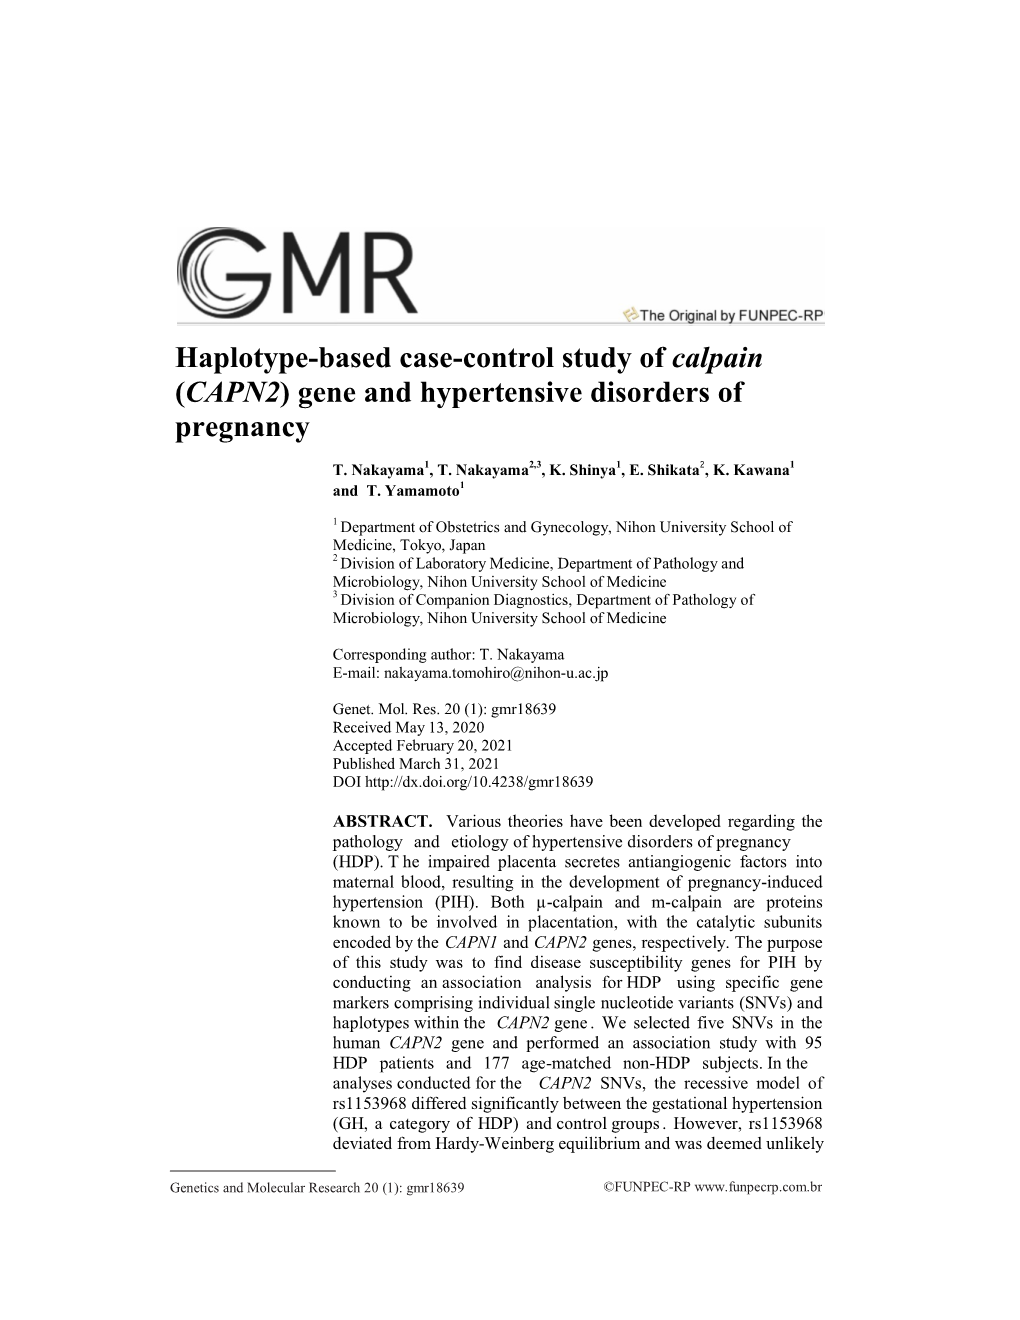 Haplotype-Based Case-Control Study of Calpain (CAPN2) Gene and Hypertensive Disorders of Pregnancy